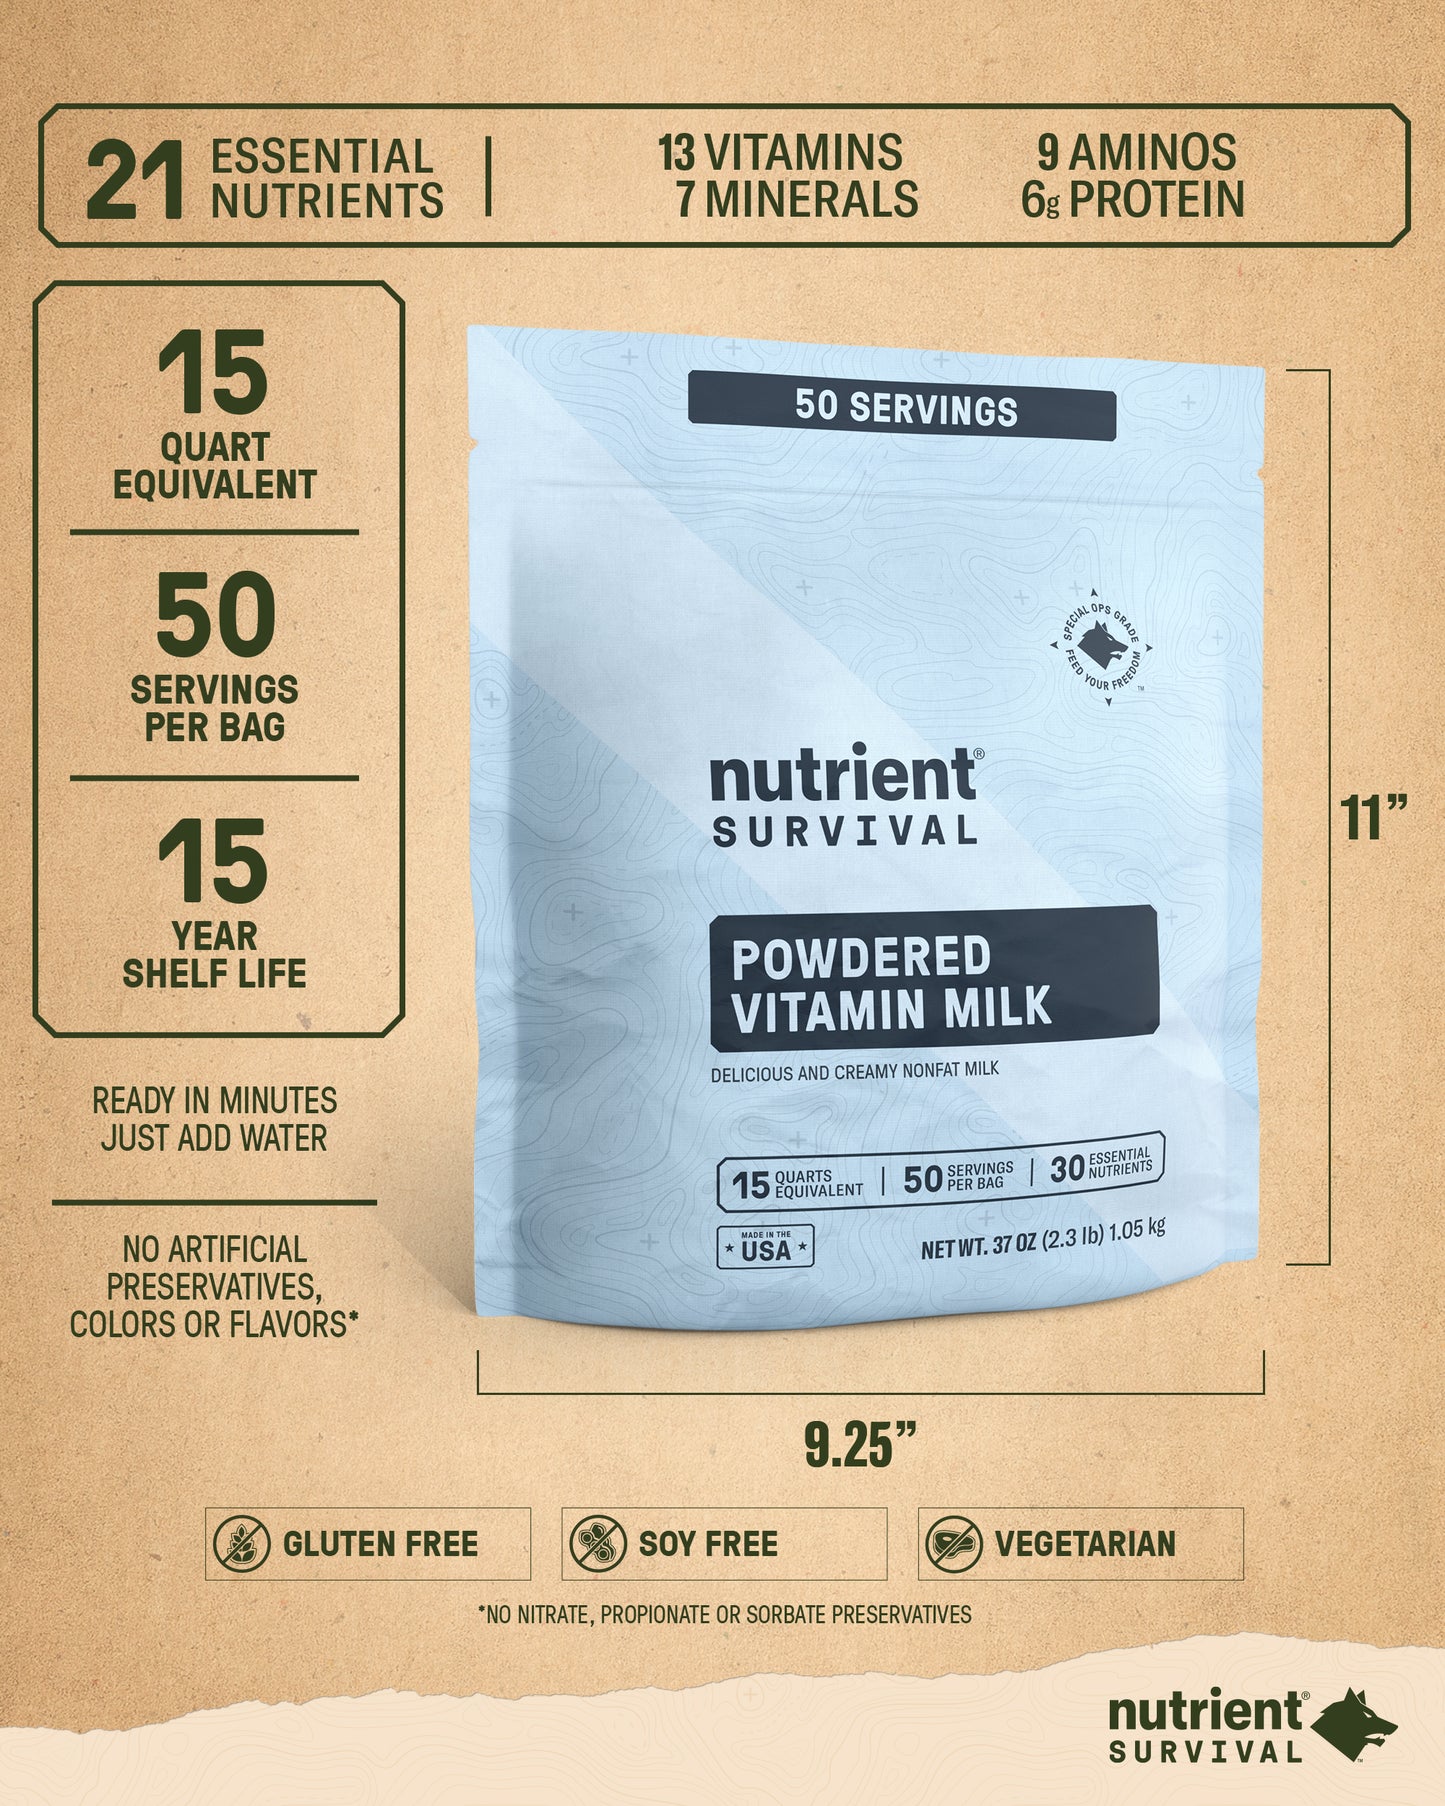 Powdered Vitamin Milk Pantry Pack